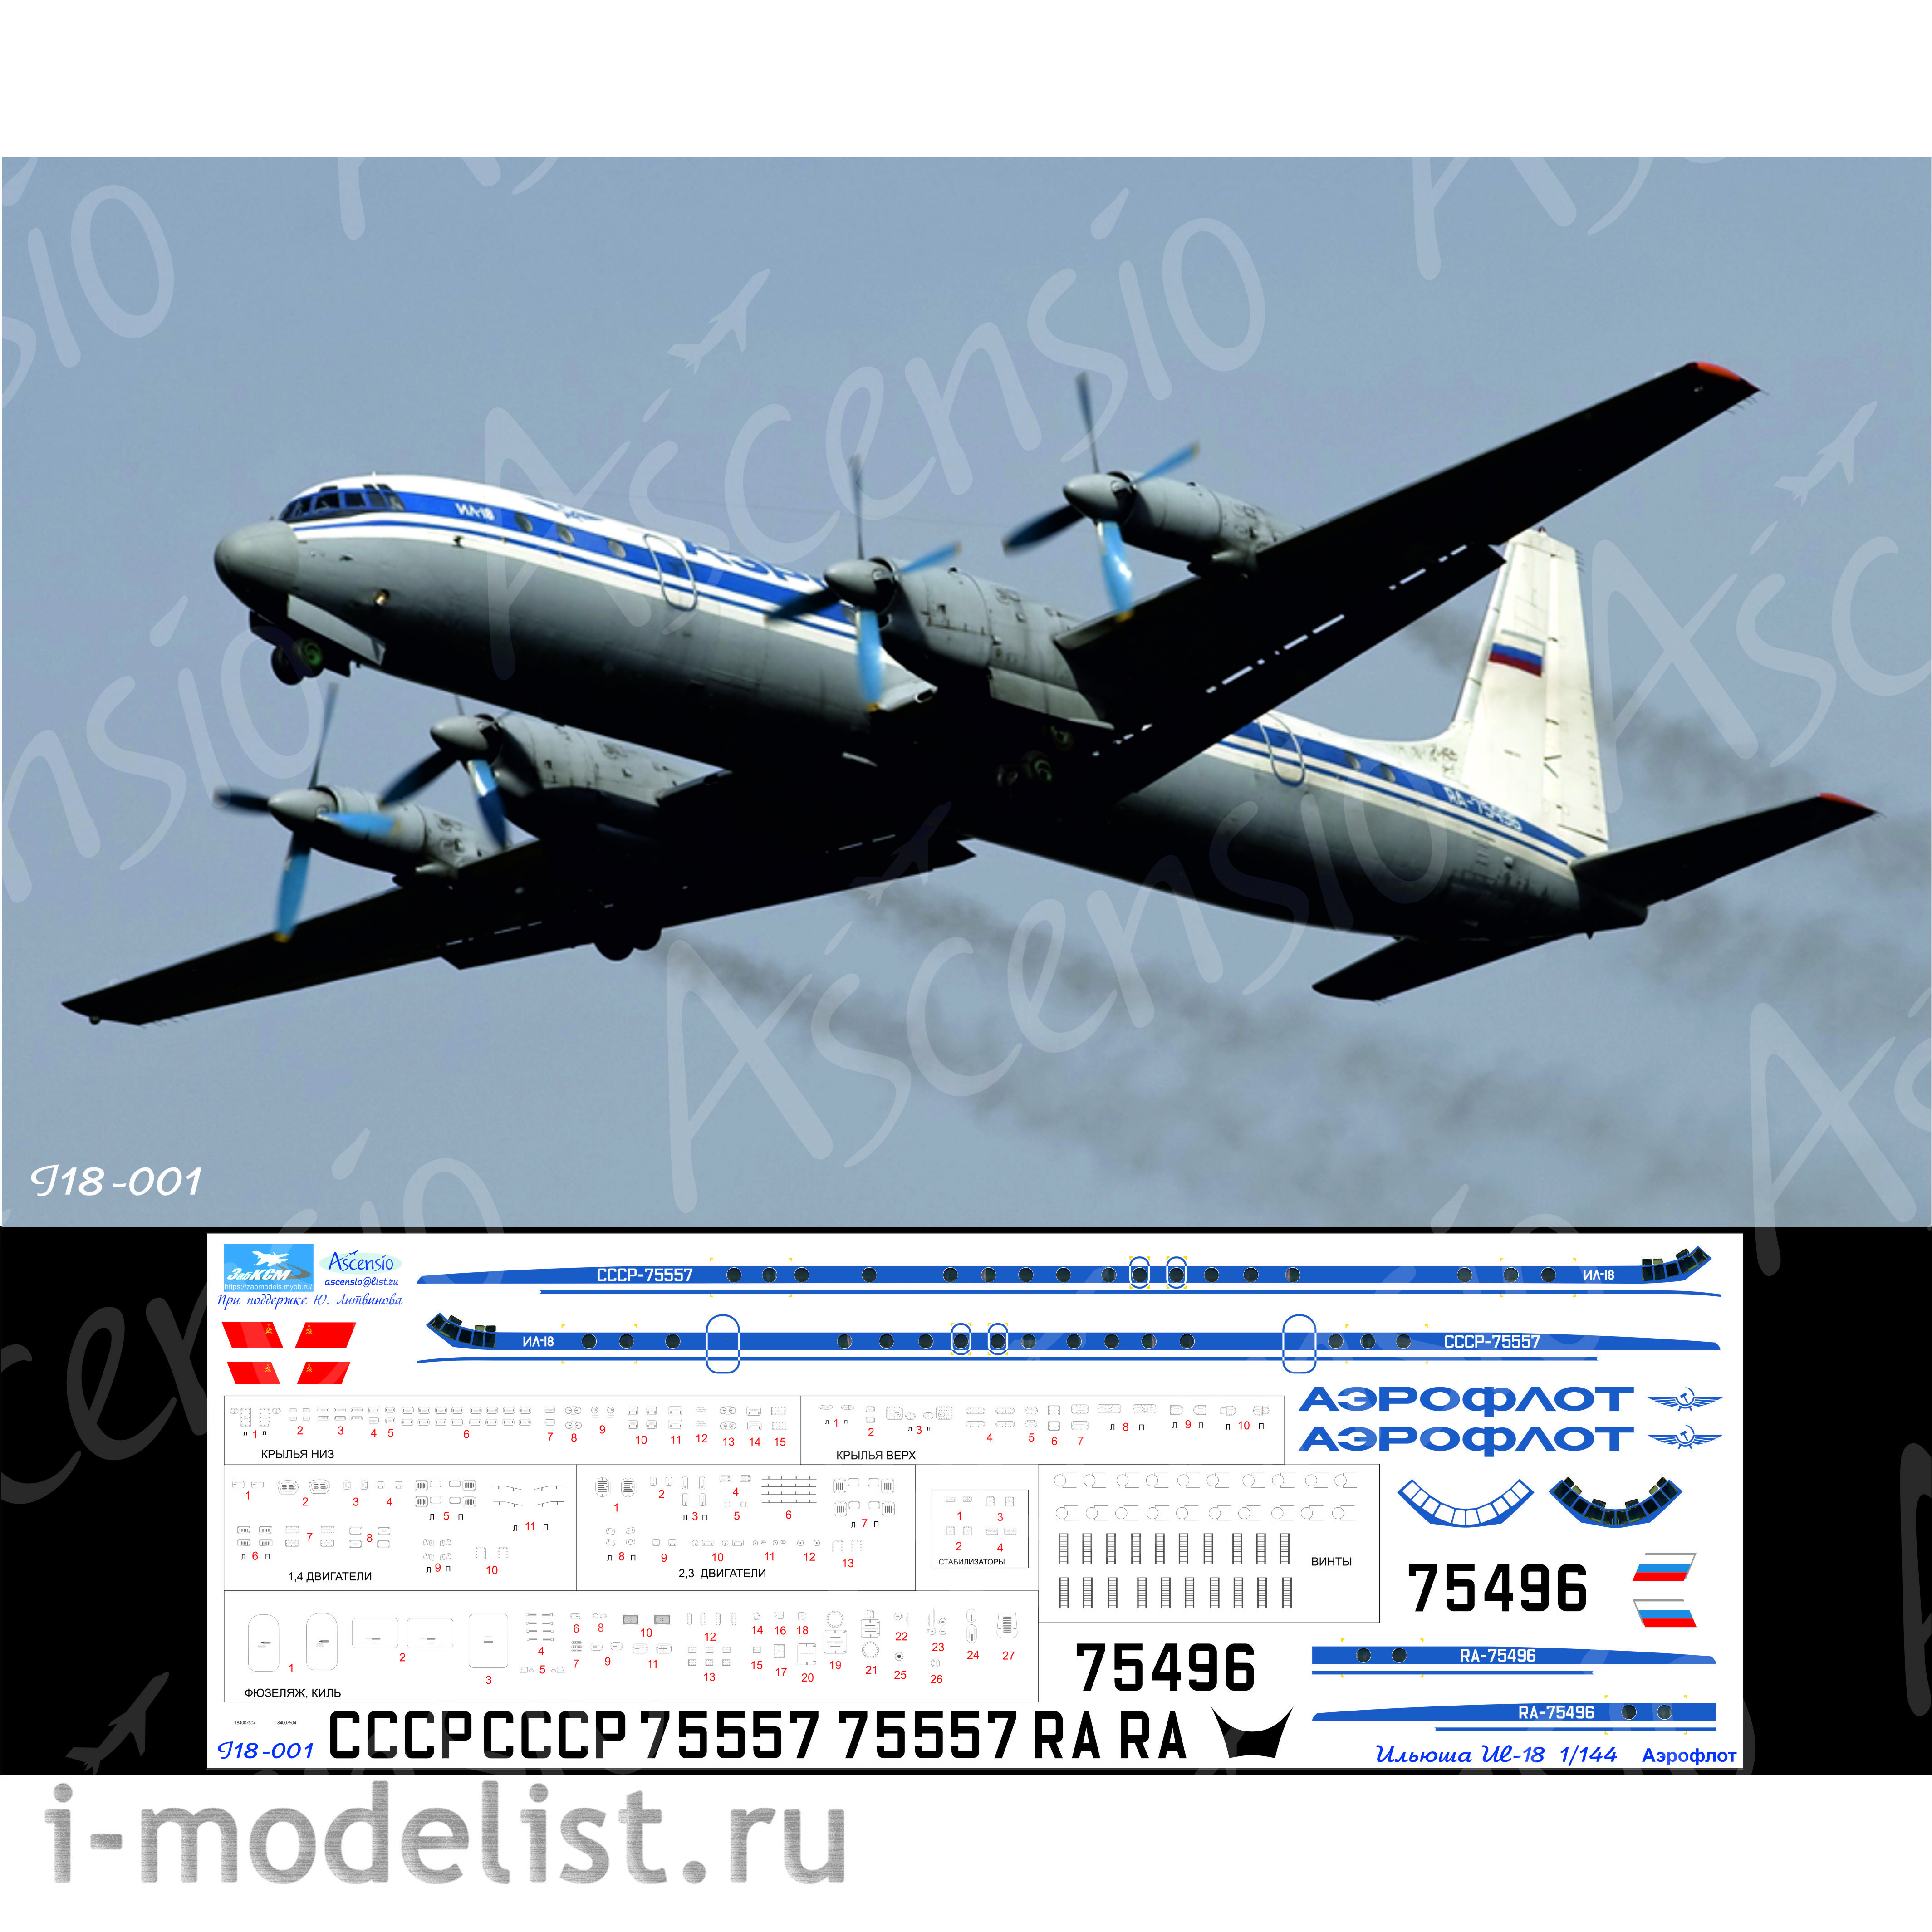 I18-001 Ascensio 1/144 Декаль на самолёт IL-18 (Аэрофлот classik 80-90х)